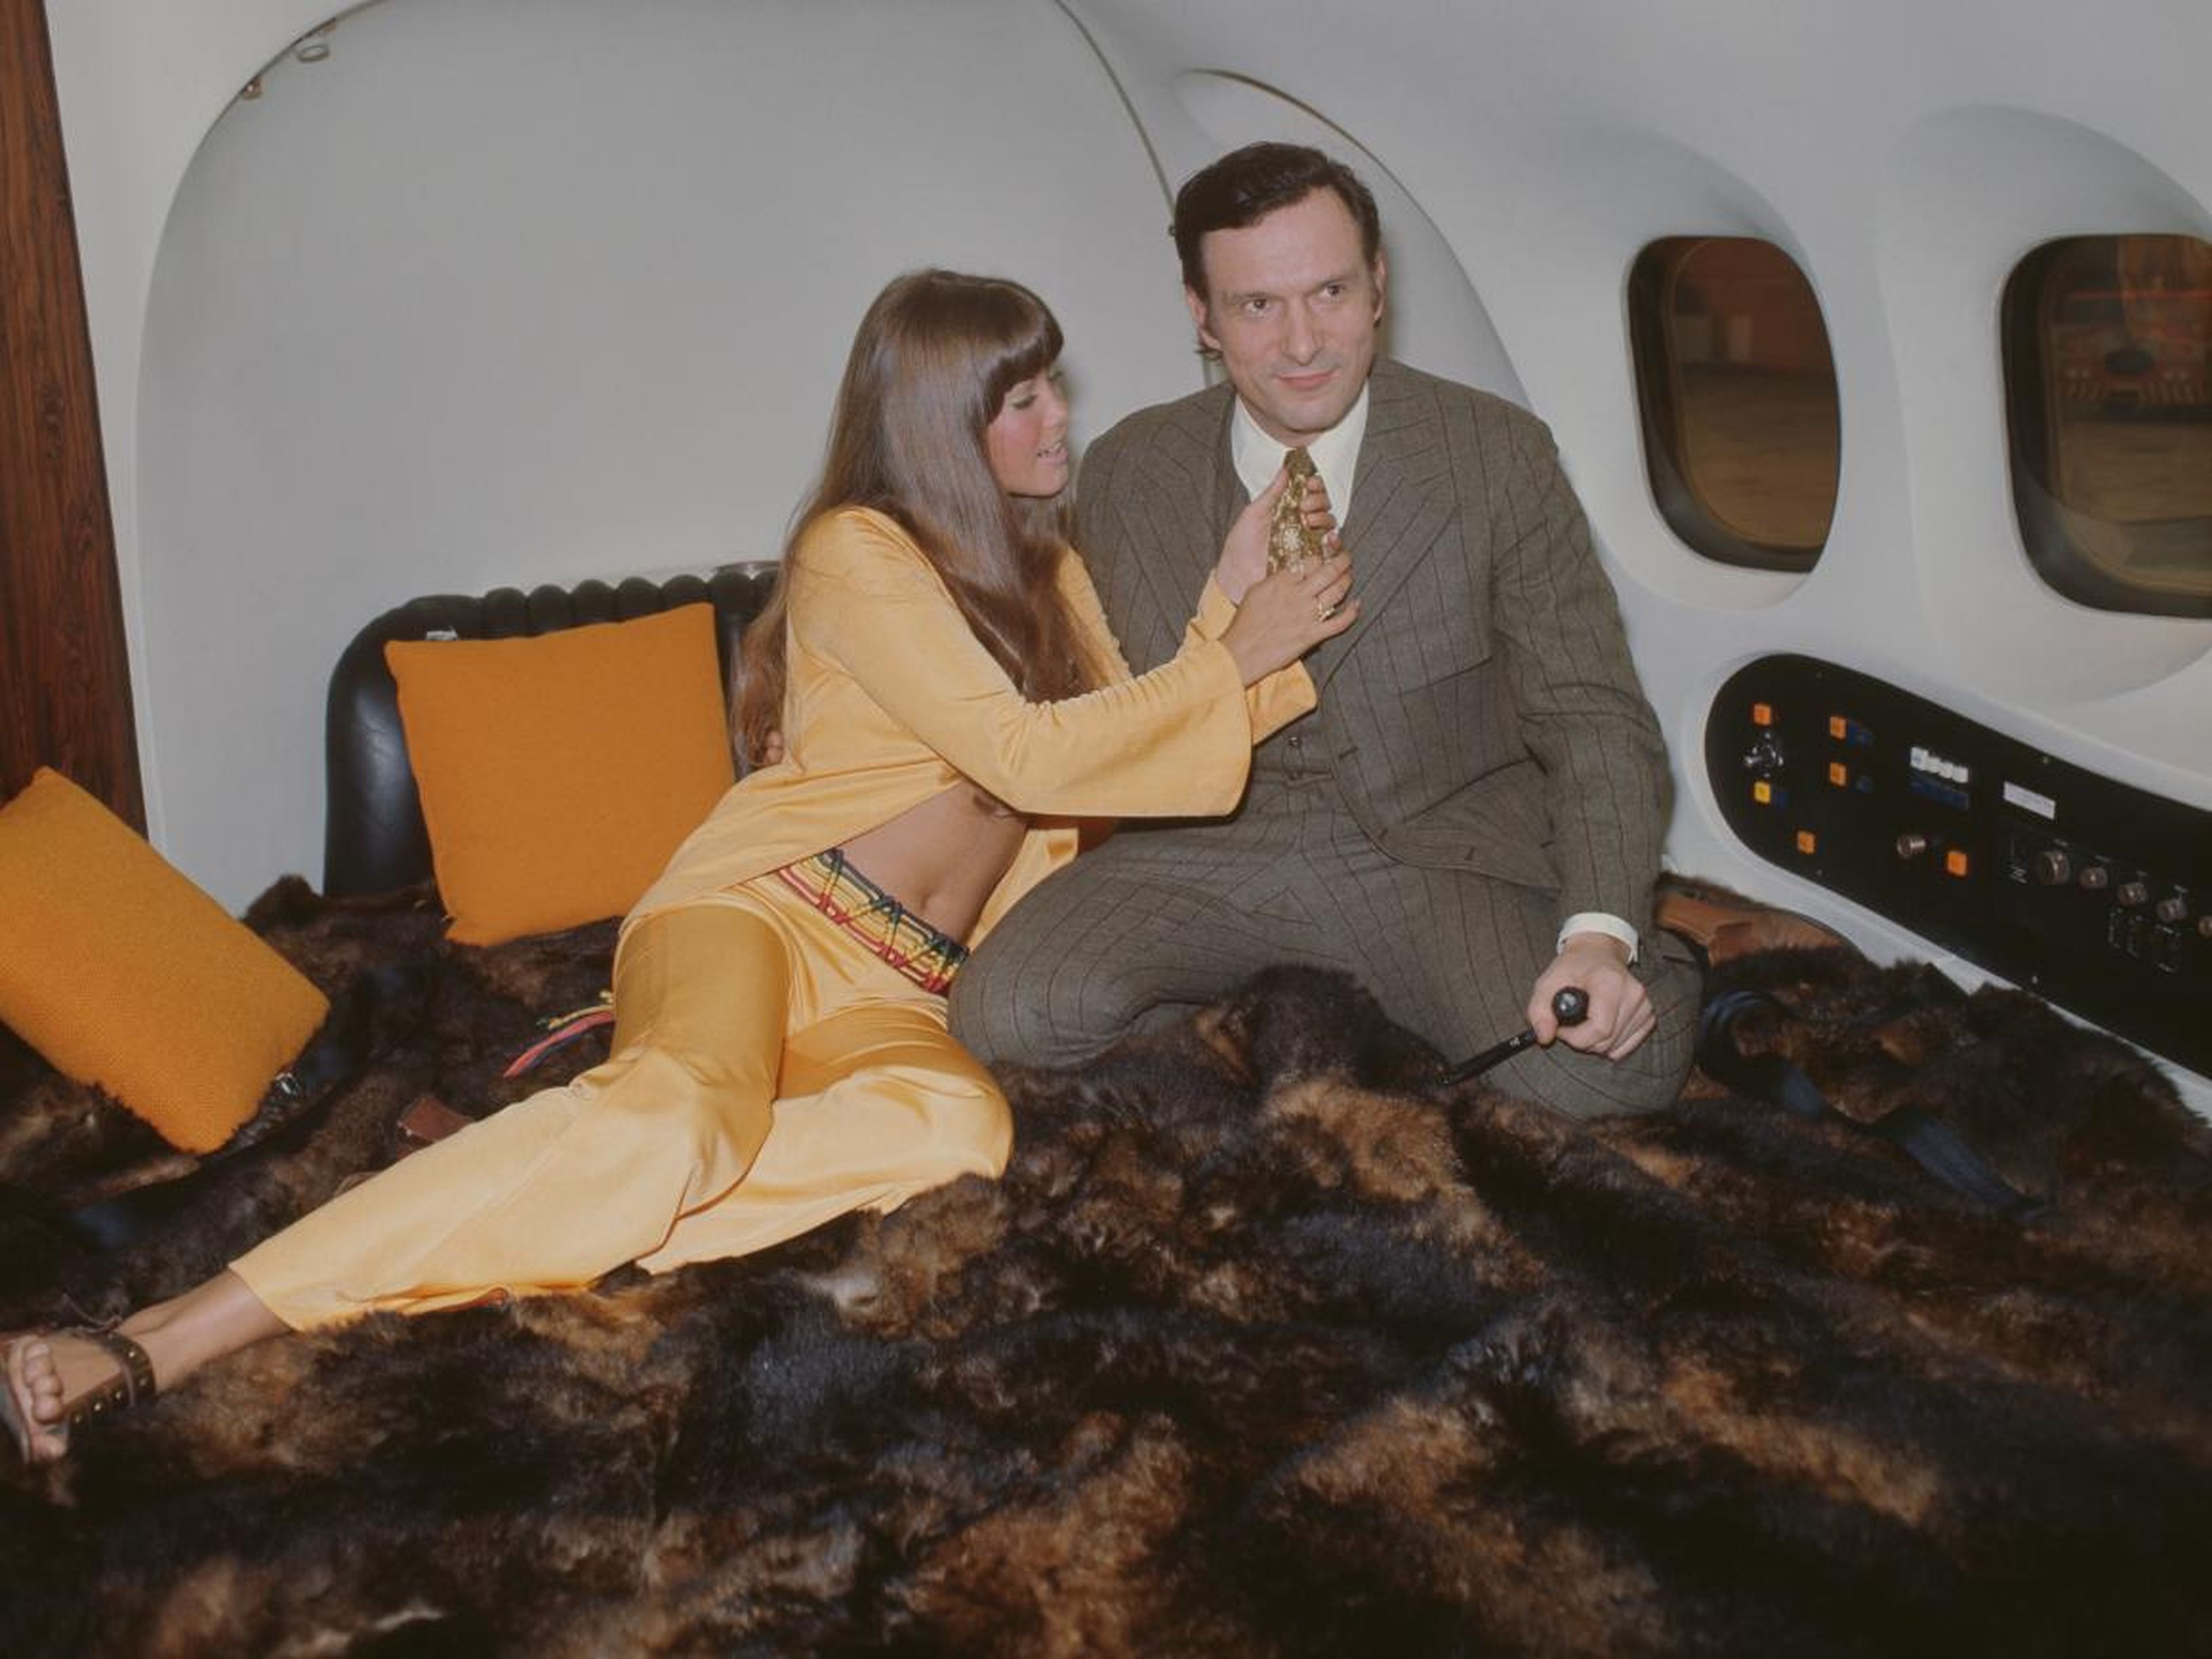 Hefner and his girlfriend Barbi Benton on board "Big Bunny" at London Airport in 1970.